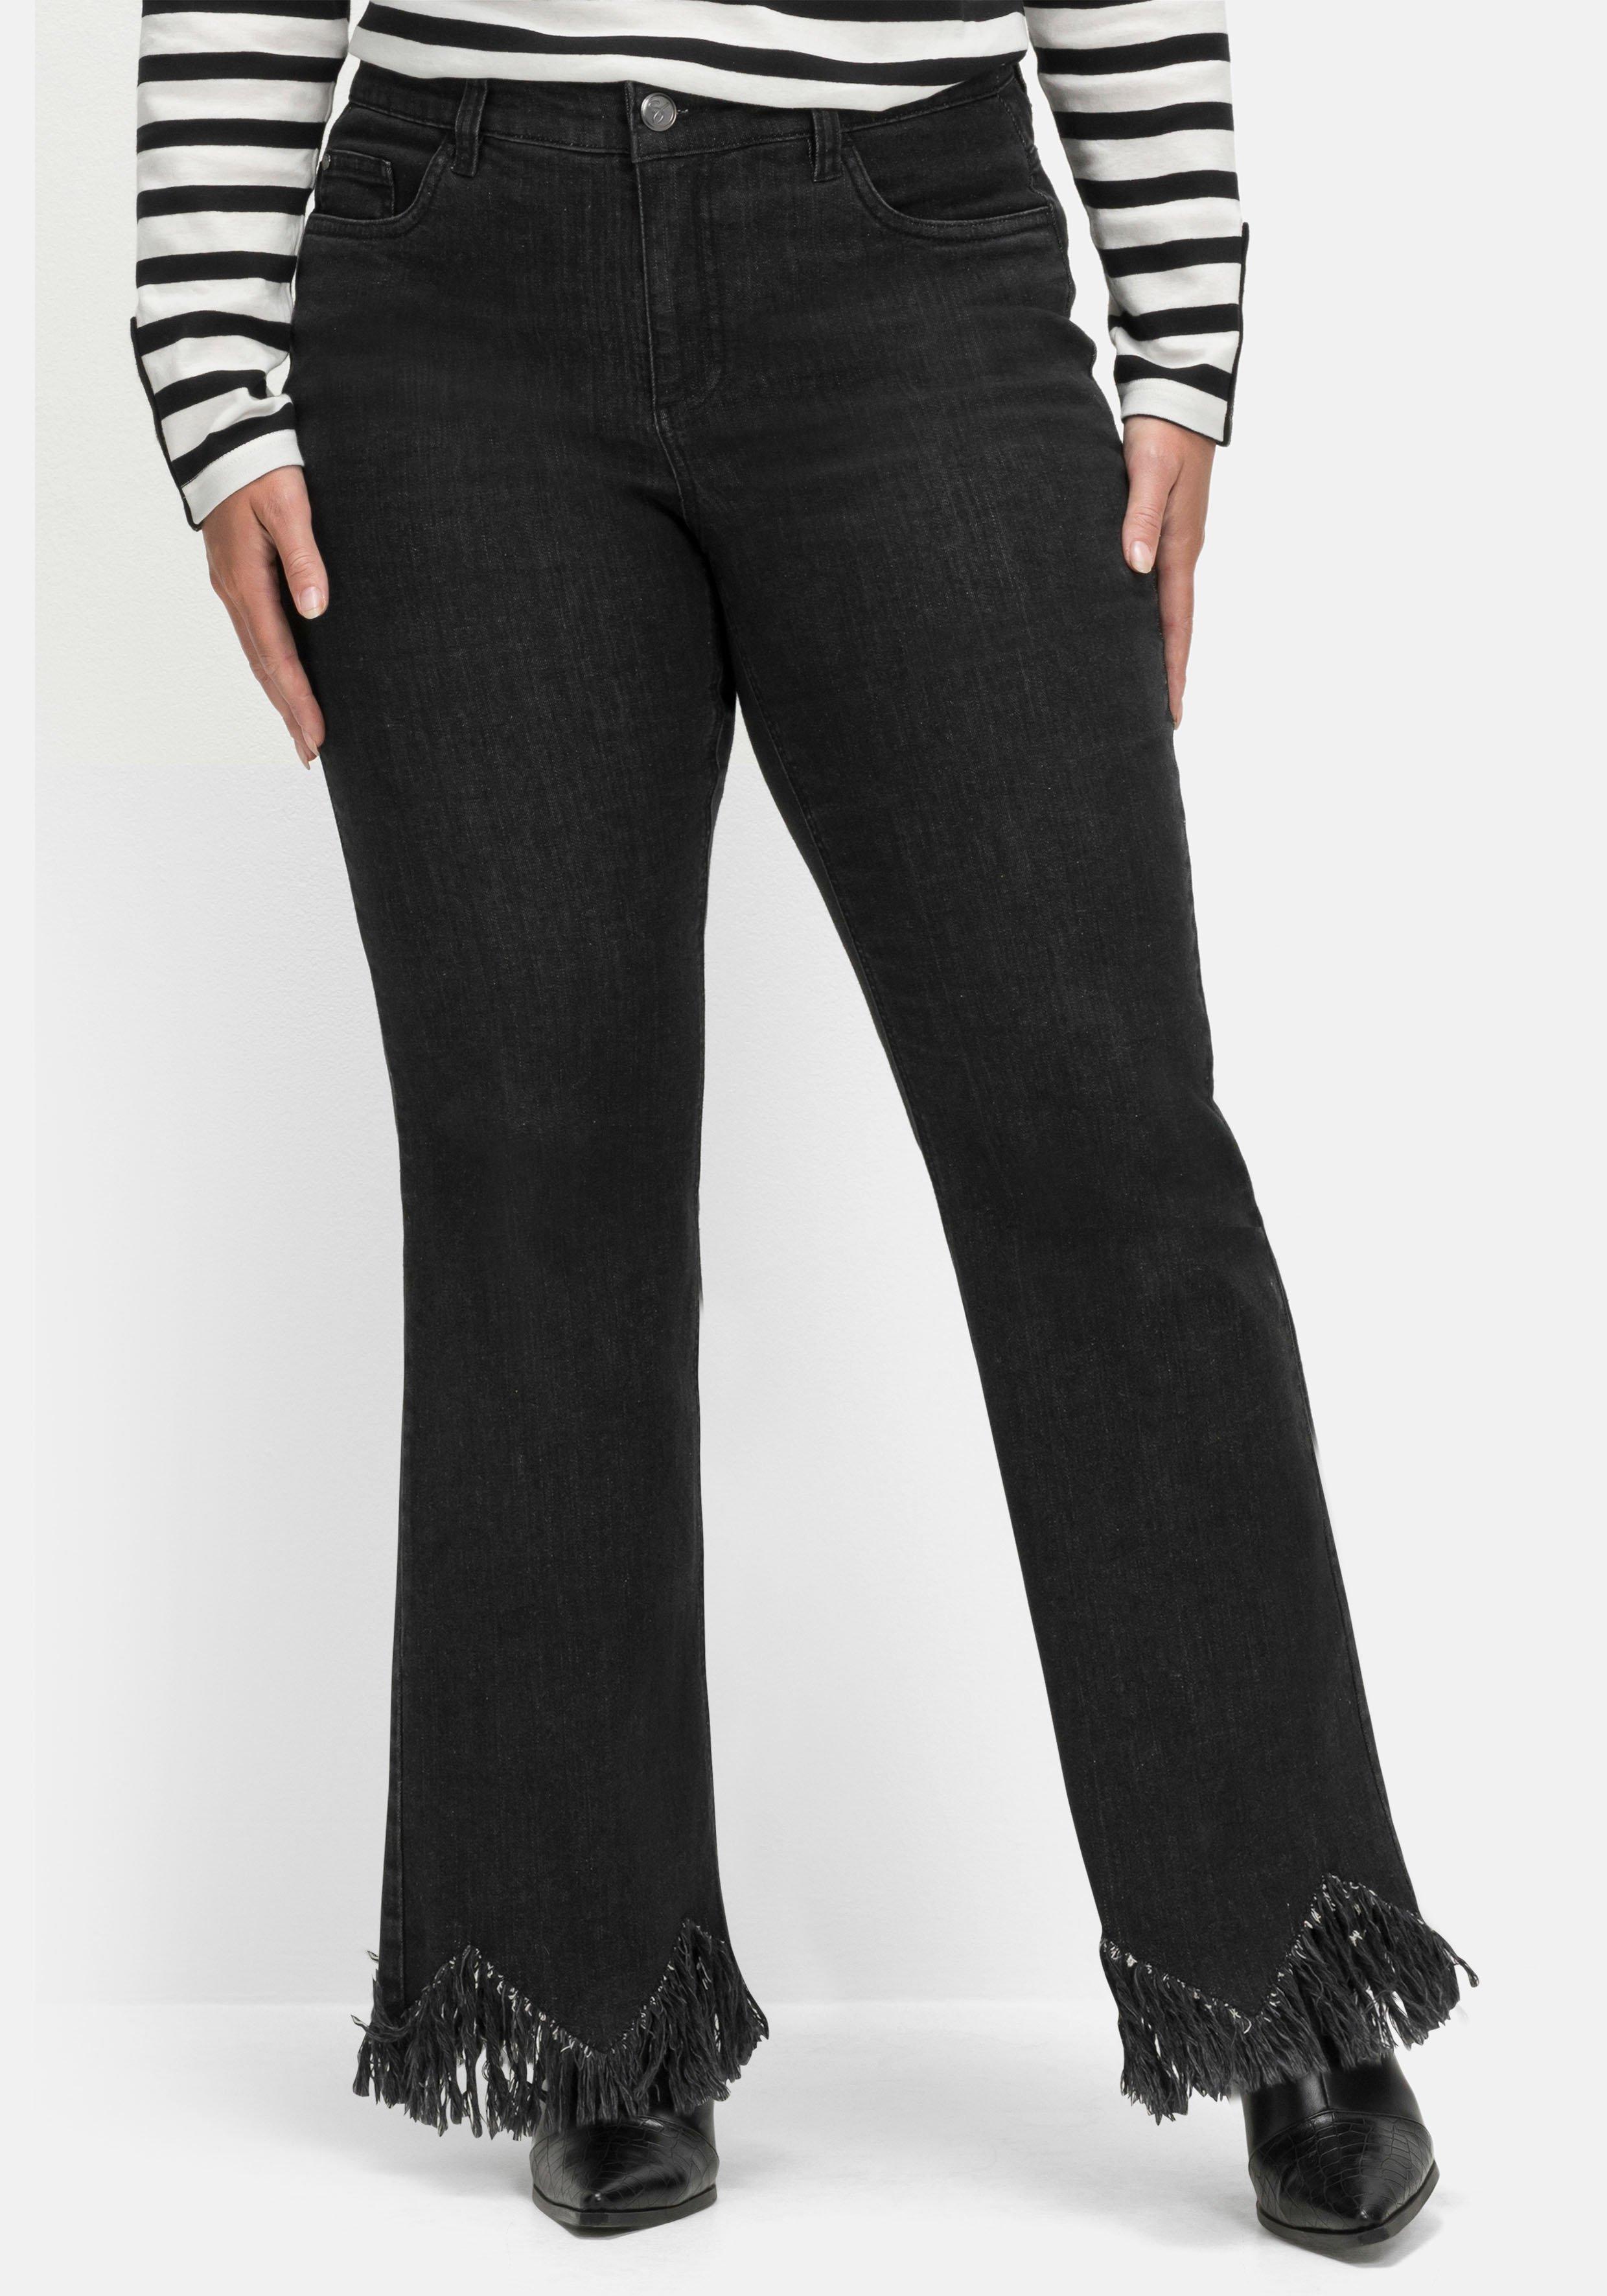 Bootcut-Jeans mit Fransensaum in sheego black Zickzack-Form Denim - 